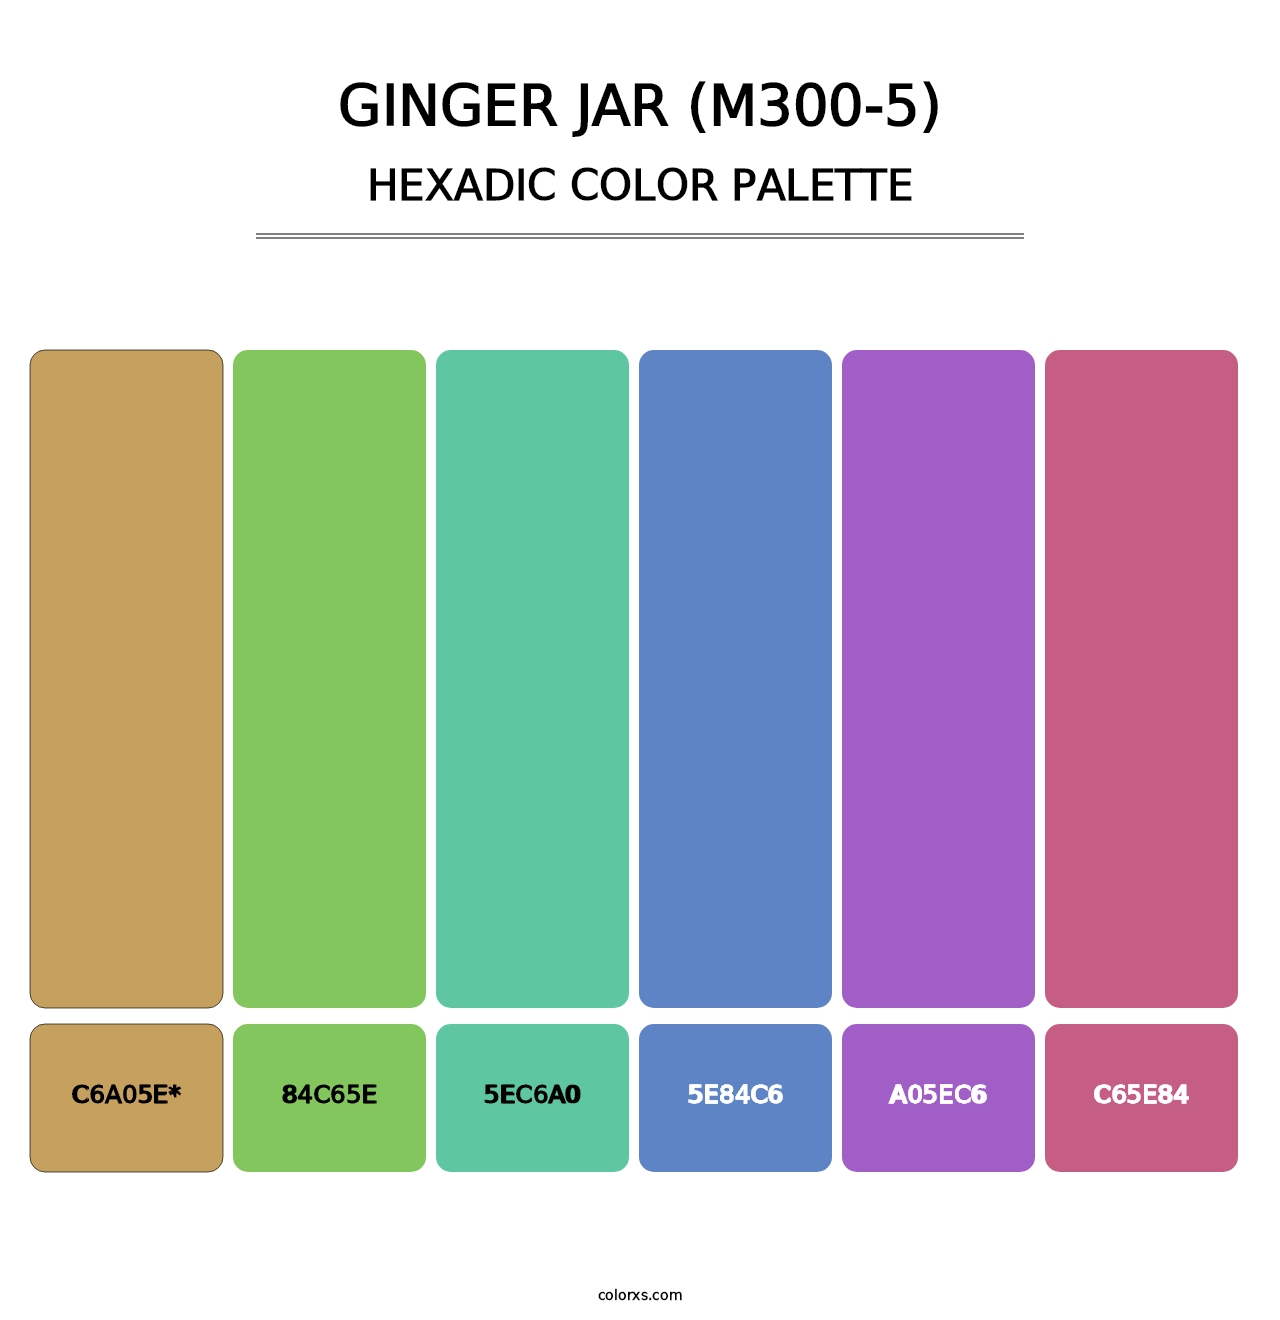 Ginger Jar (M300-5) - Hexadic Color Palette